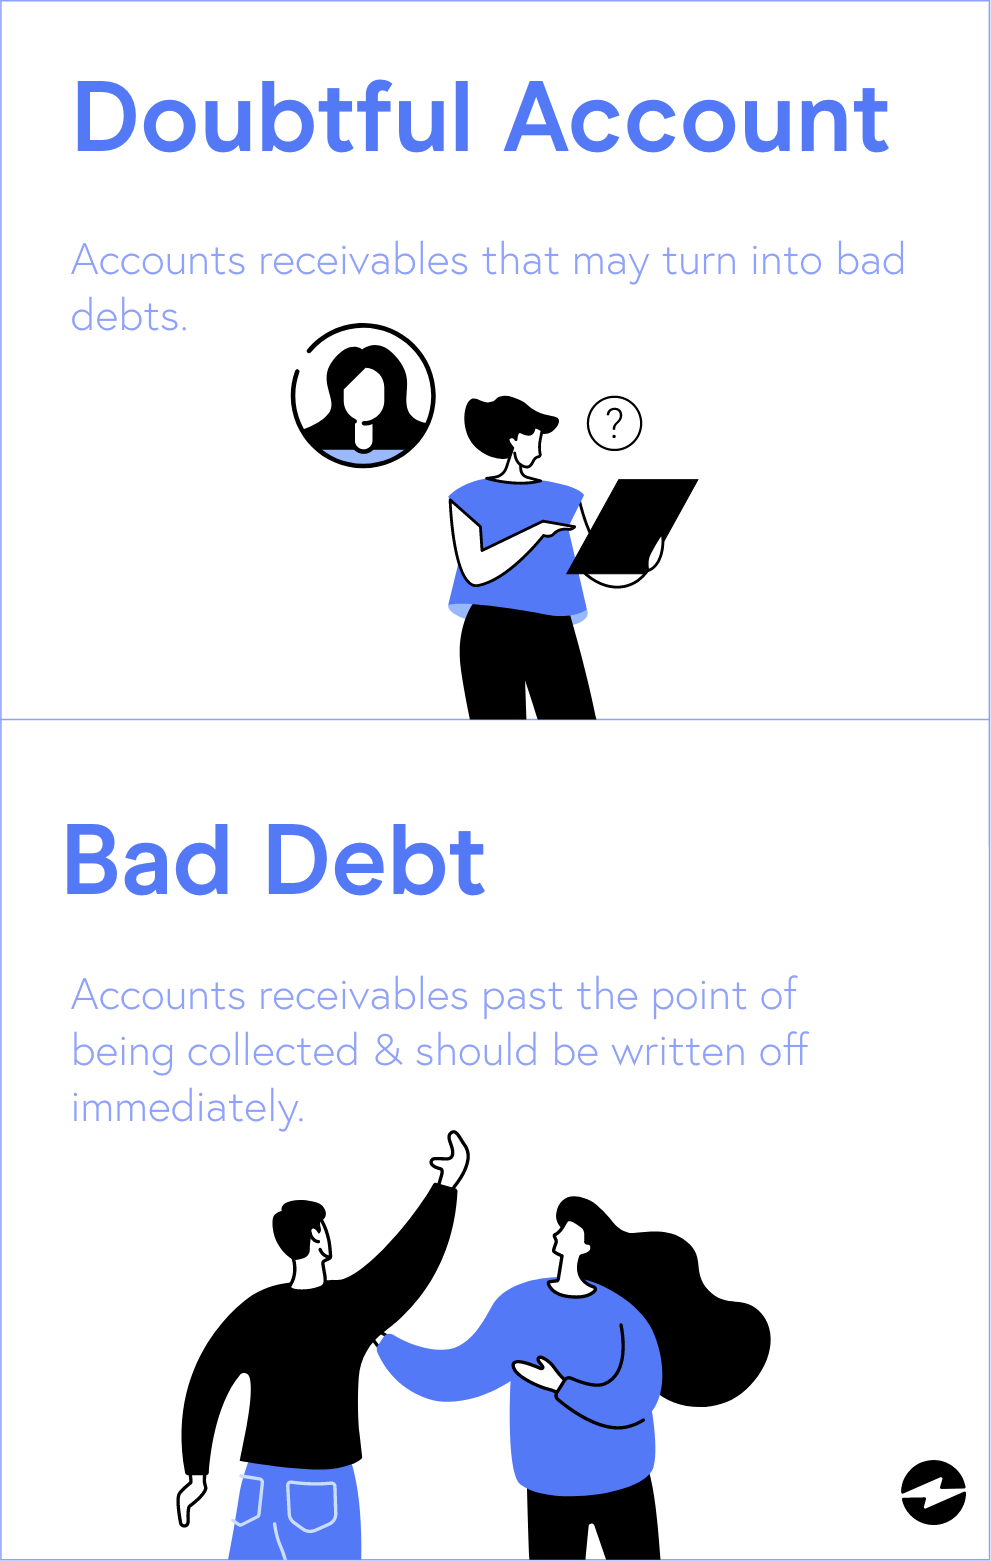 Doubtful Accounts vs. Bad Debt